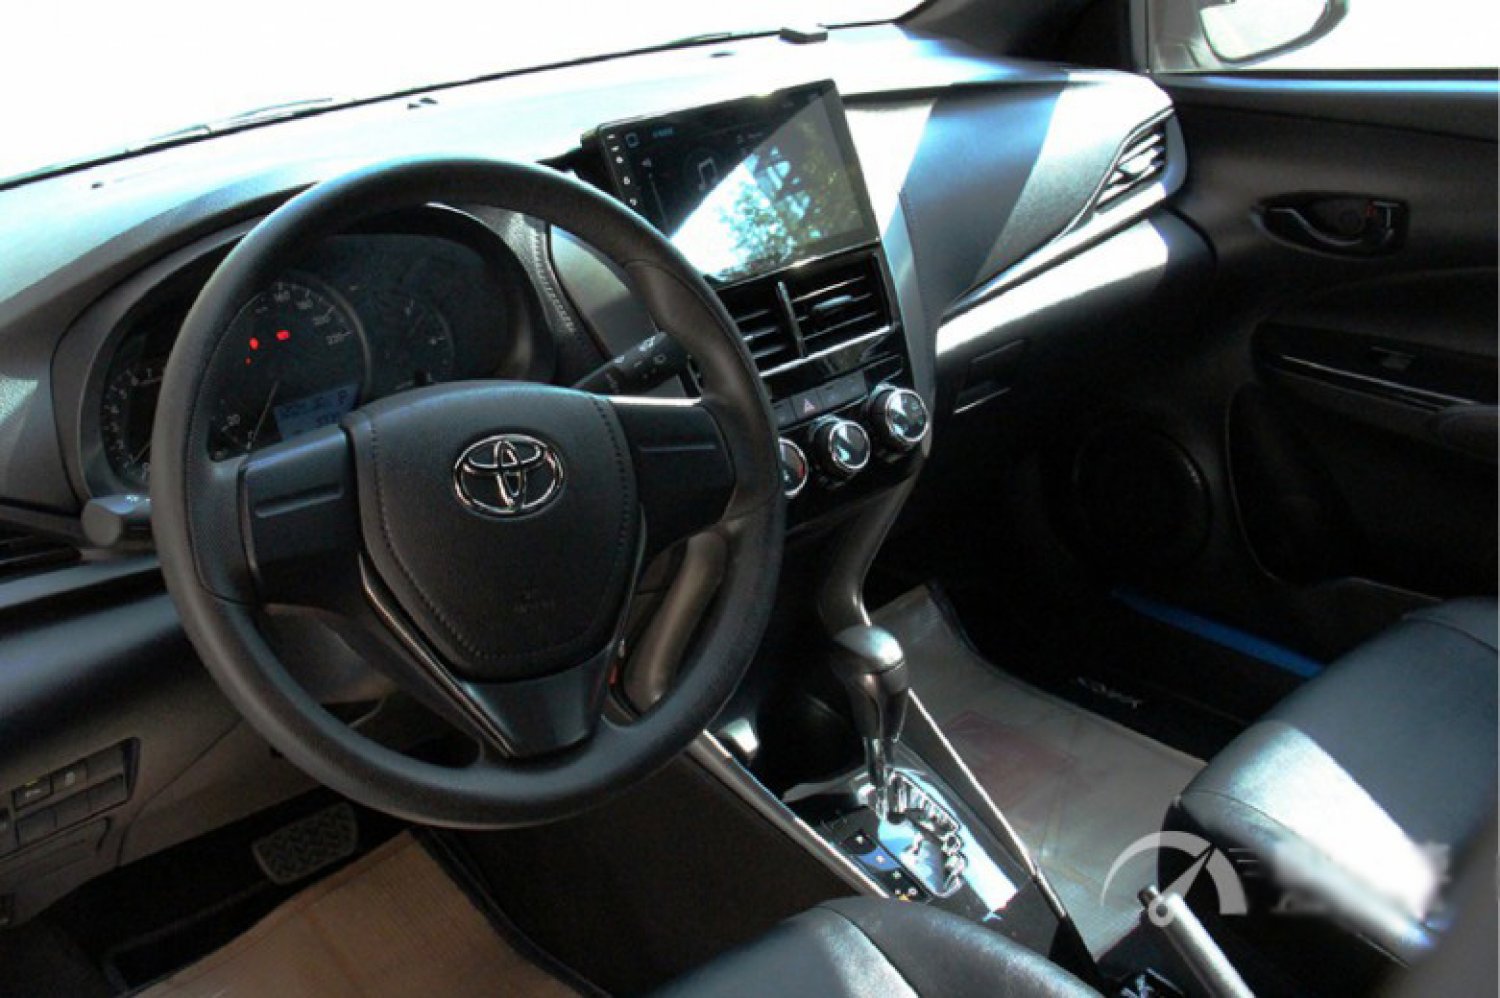 Toyota 豐田 ／ Yaris ／ 2022年 ／ 2022年Toyota Yaris 白色 豐田中古車 ／ 台中車庫